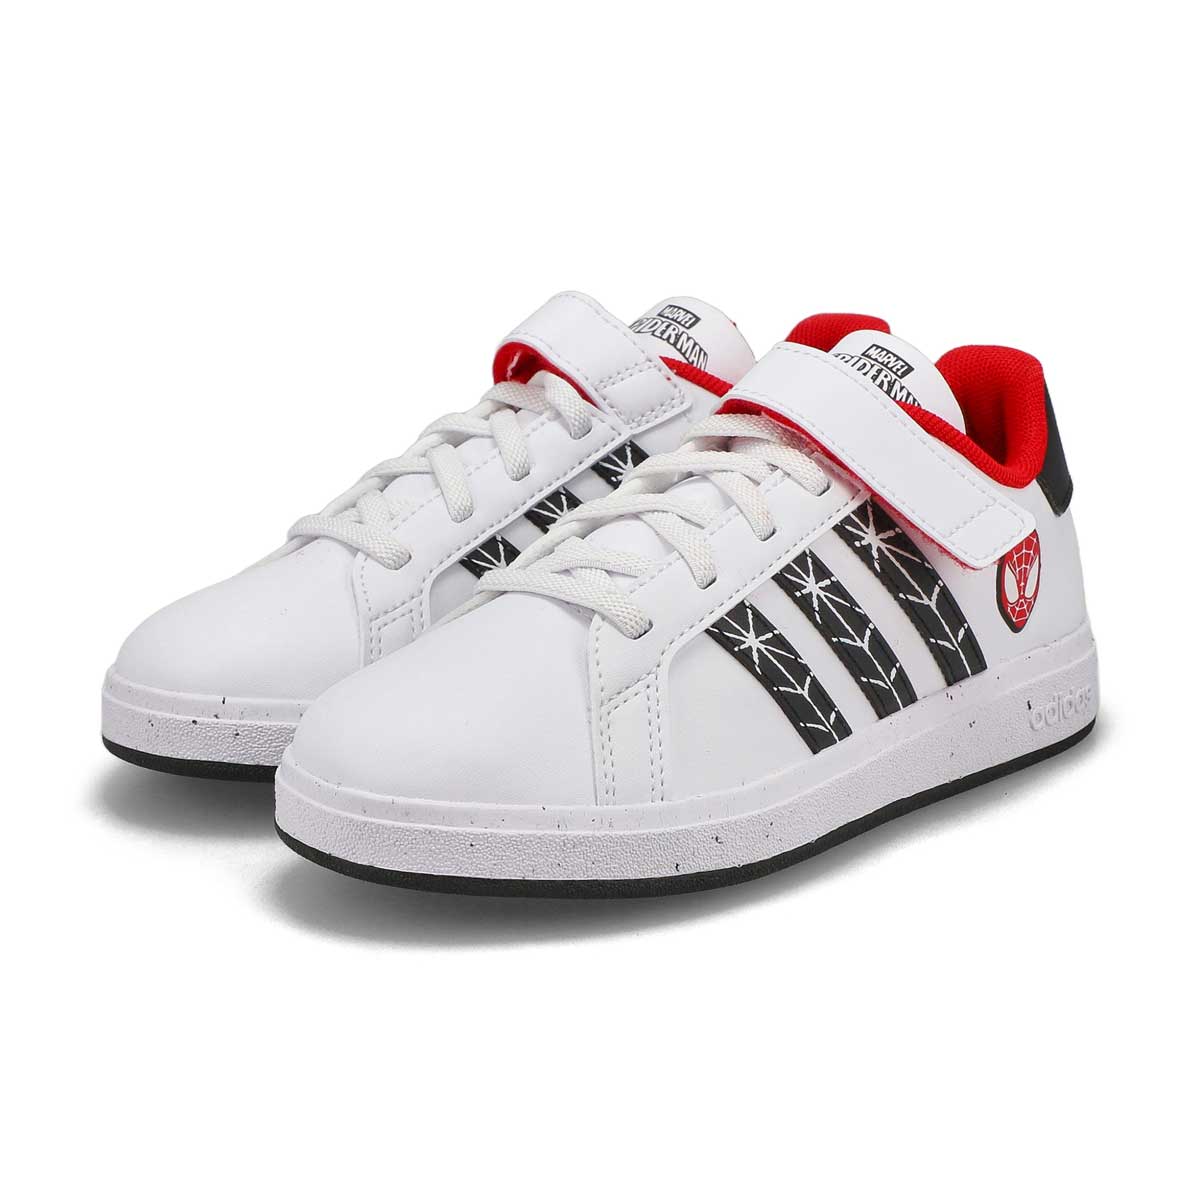 Kids' Grand Court Spiderman Sneaker - White/Black/Red